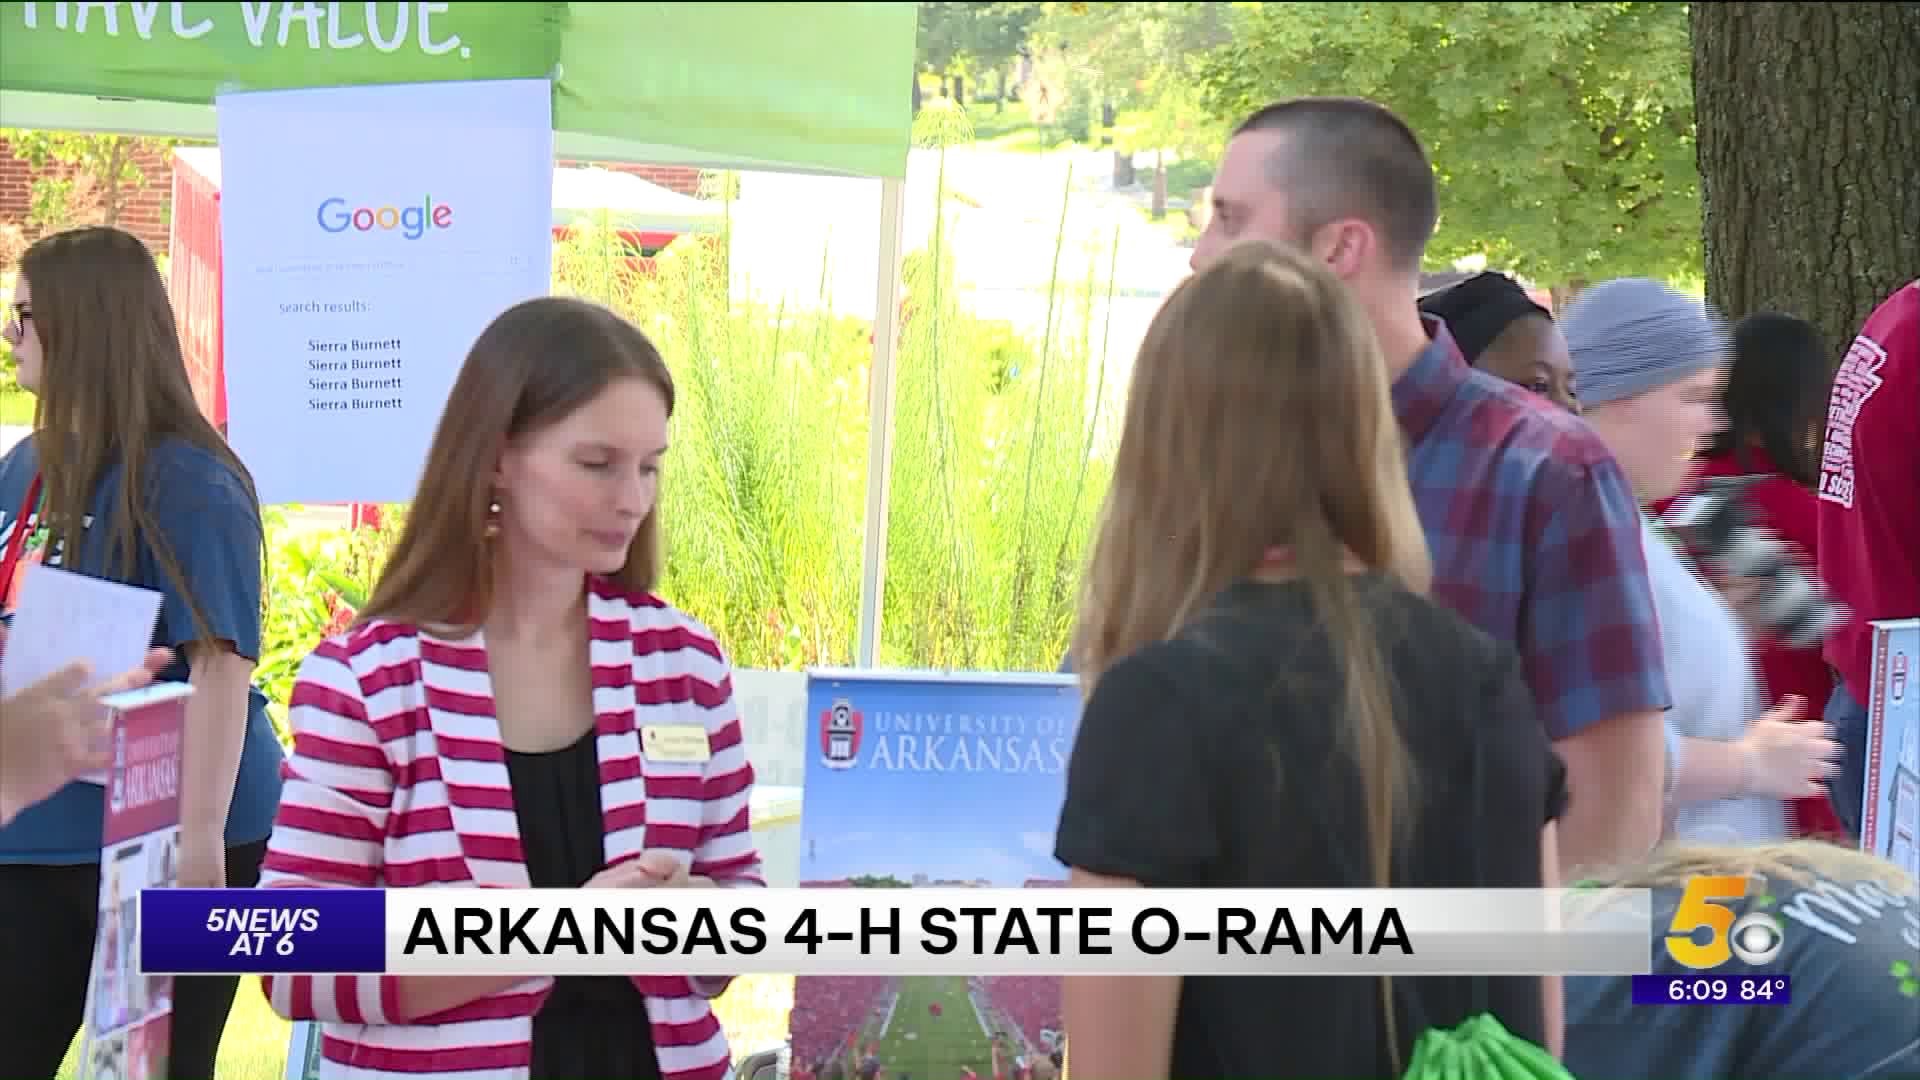 4-H State O-Rama Underway On University Of Arkansas Campus